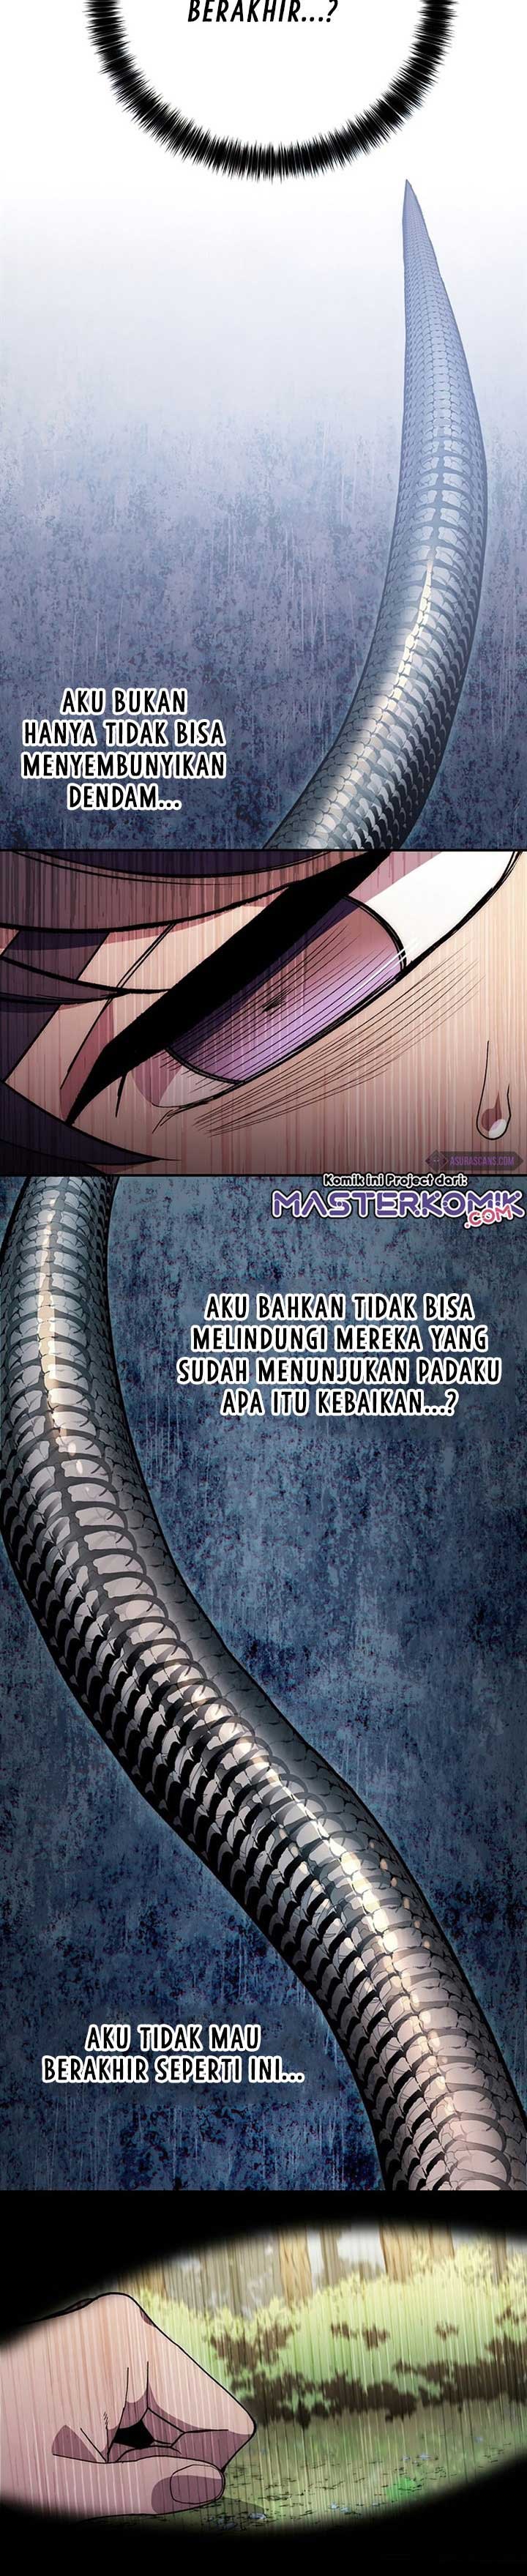 Legend of Asura – The Venom Dragon (Poison Dragon) Chapter 66